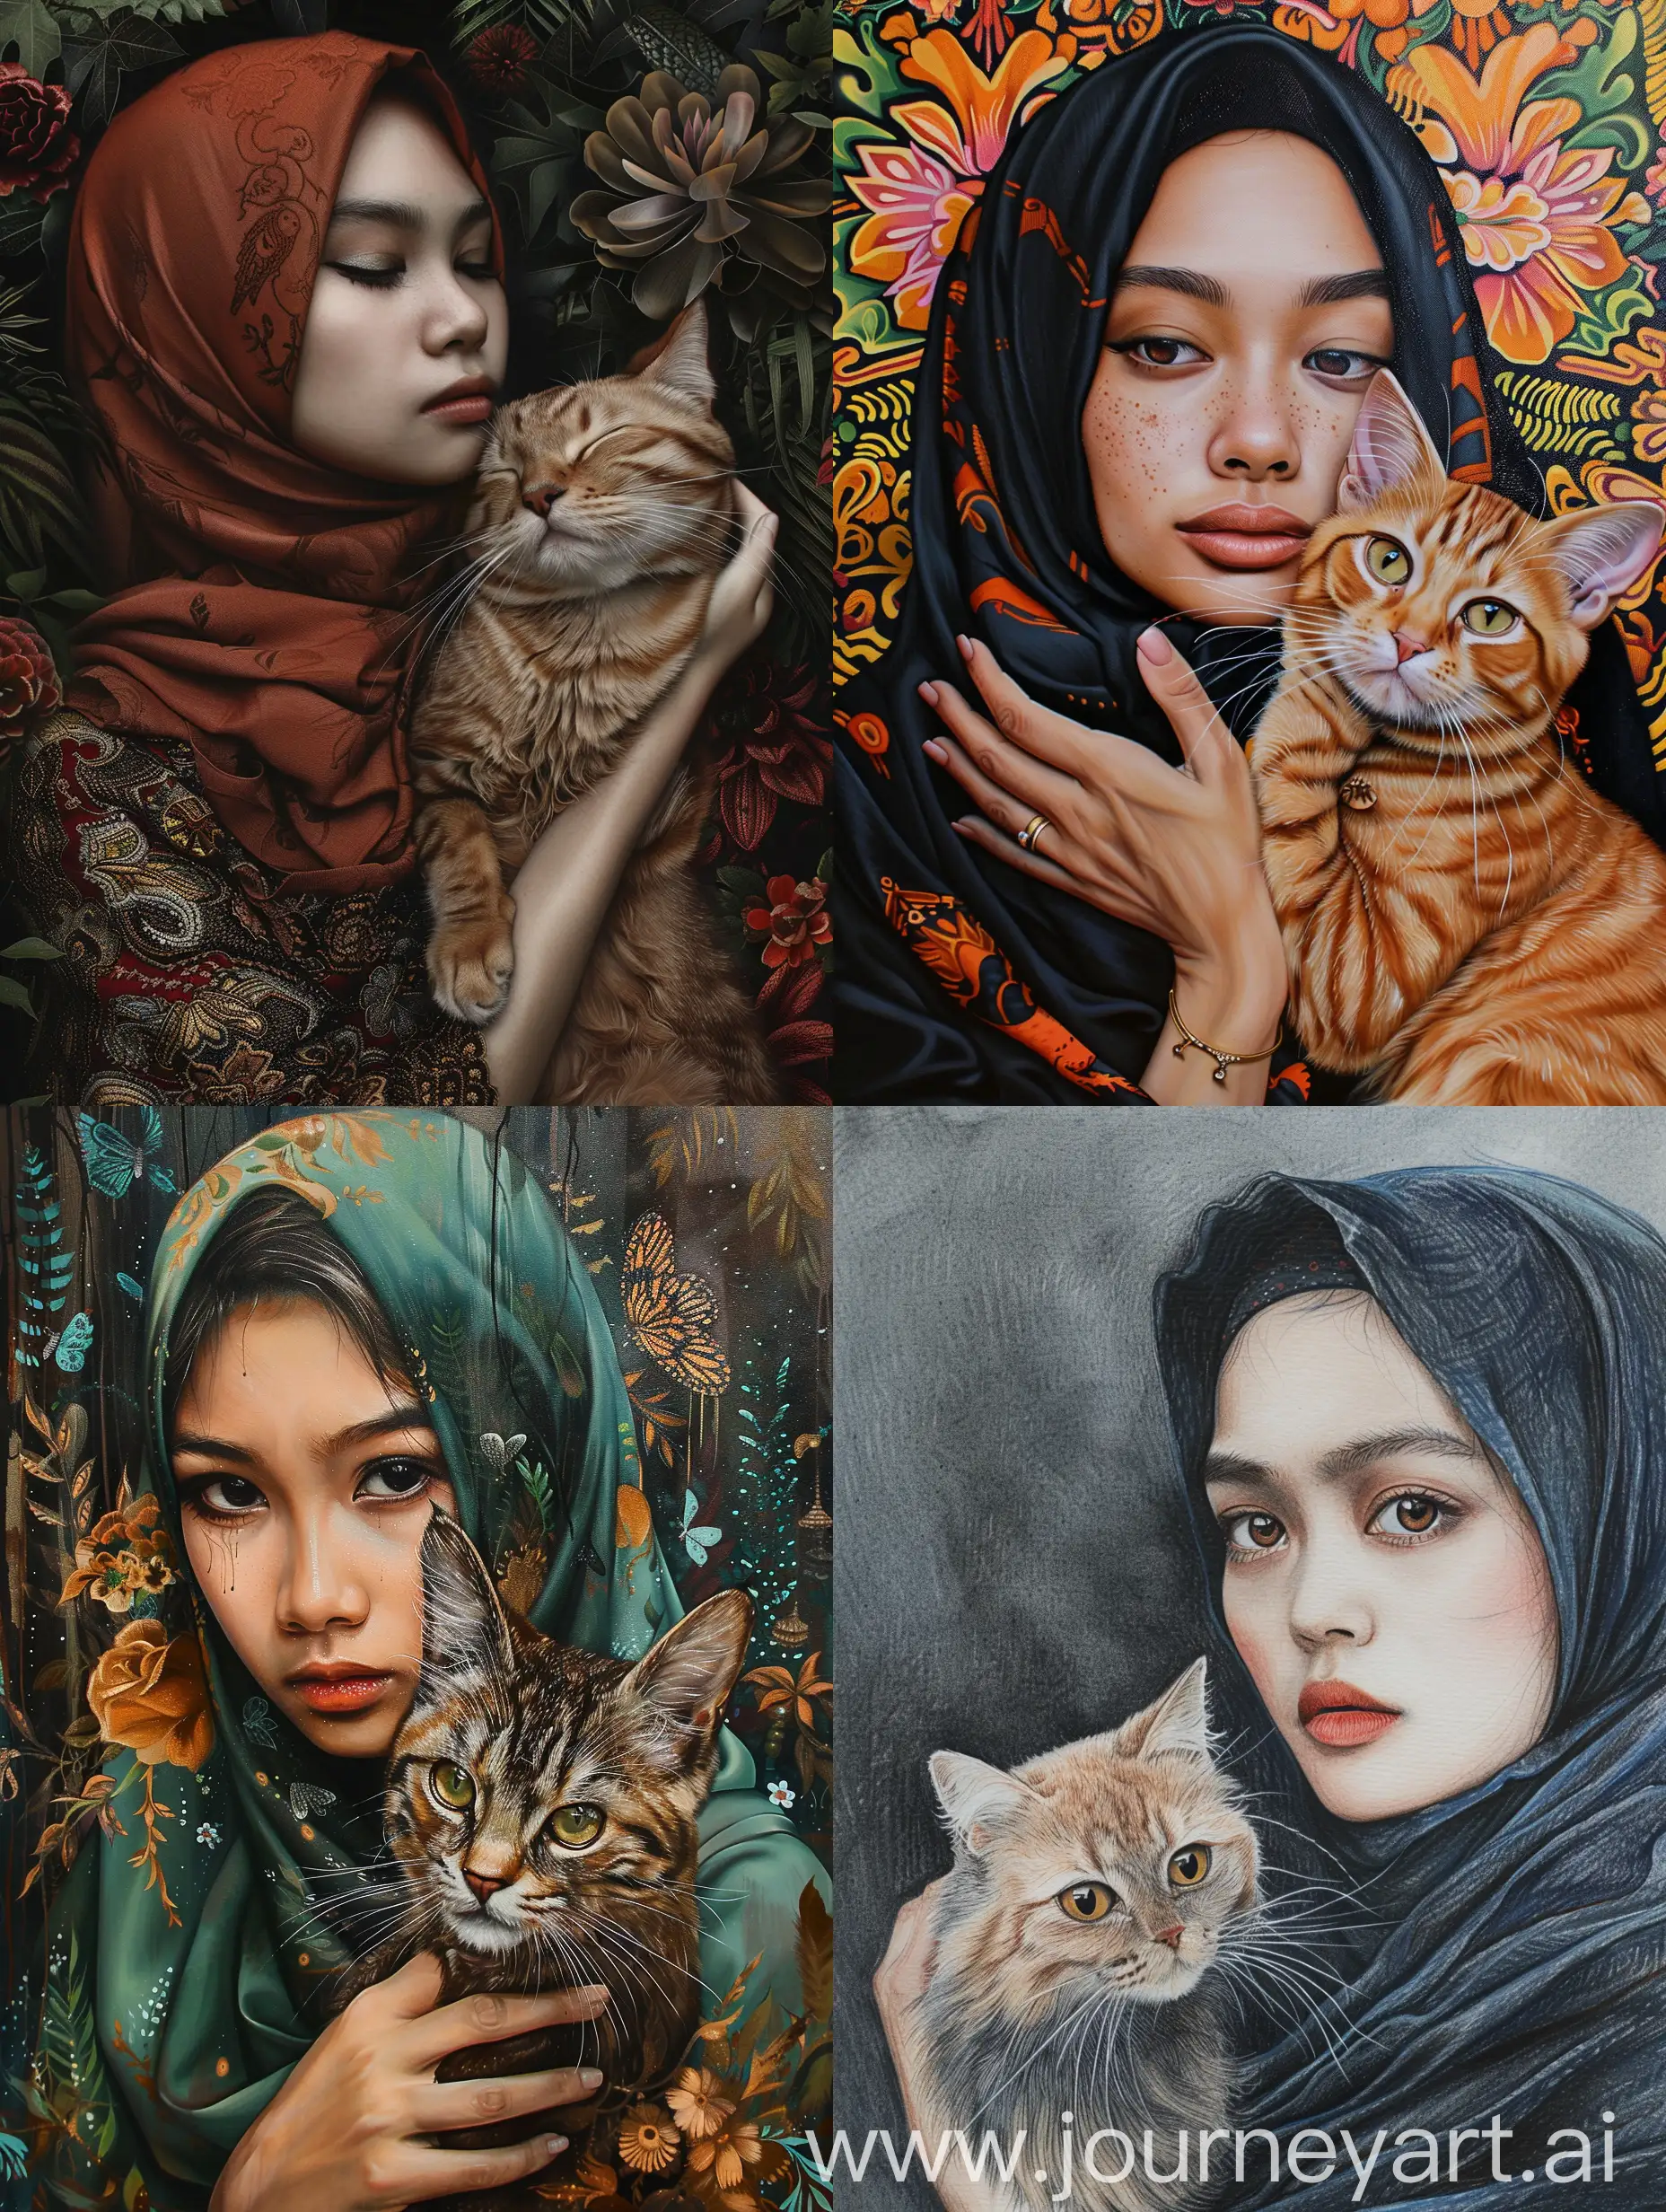 Wanita hijab cantik Indonesia berusia 25 tahun dan kucing lucu, potret fotorealistik, avoca punk. Real